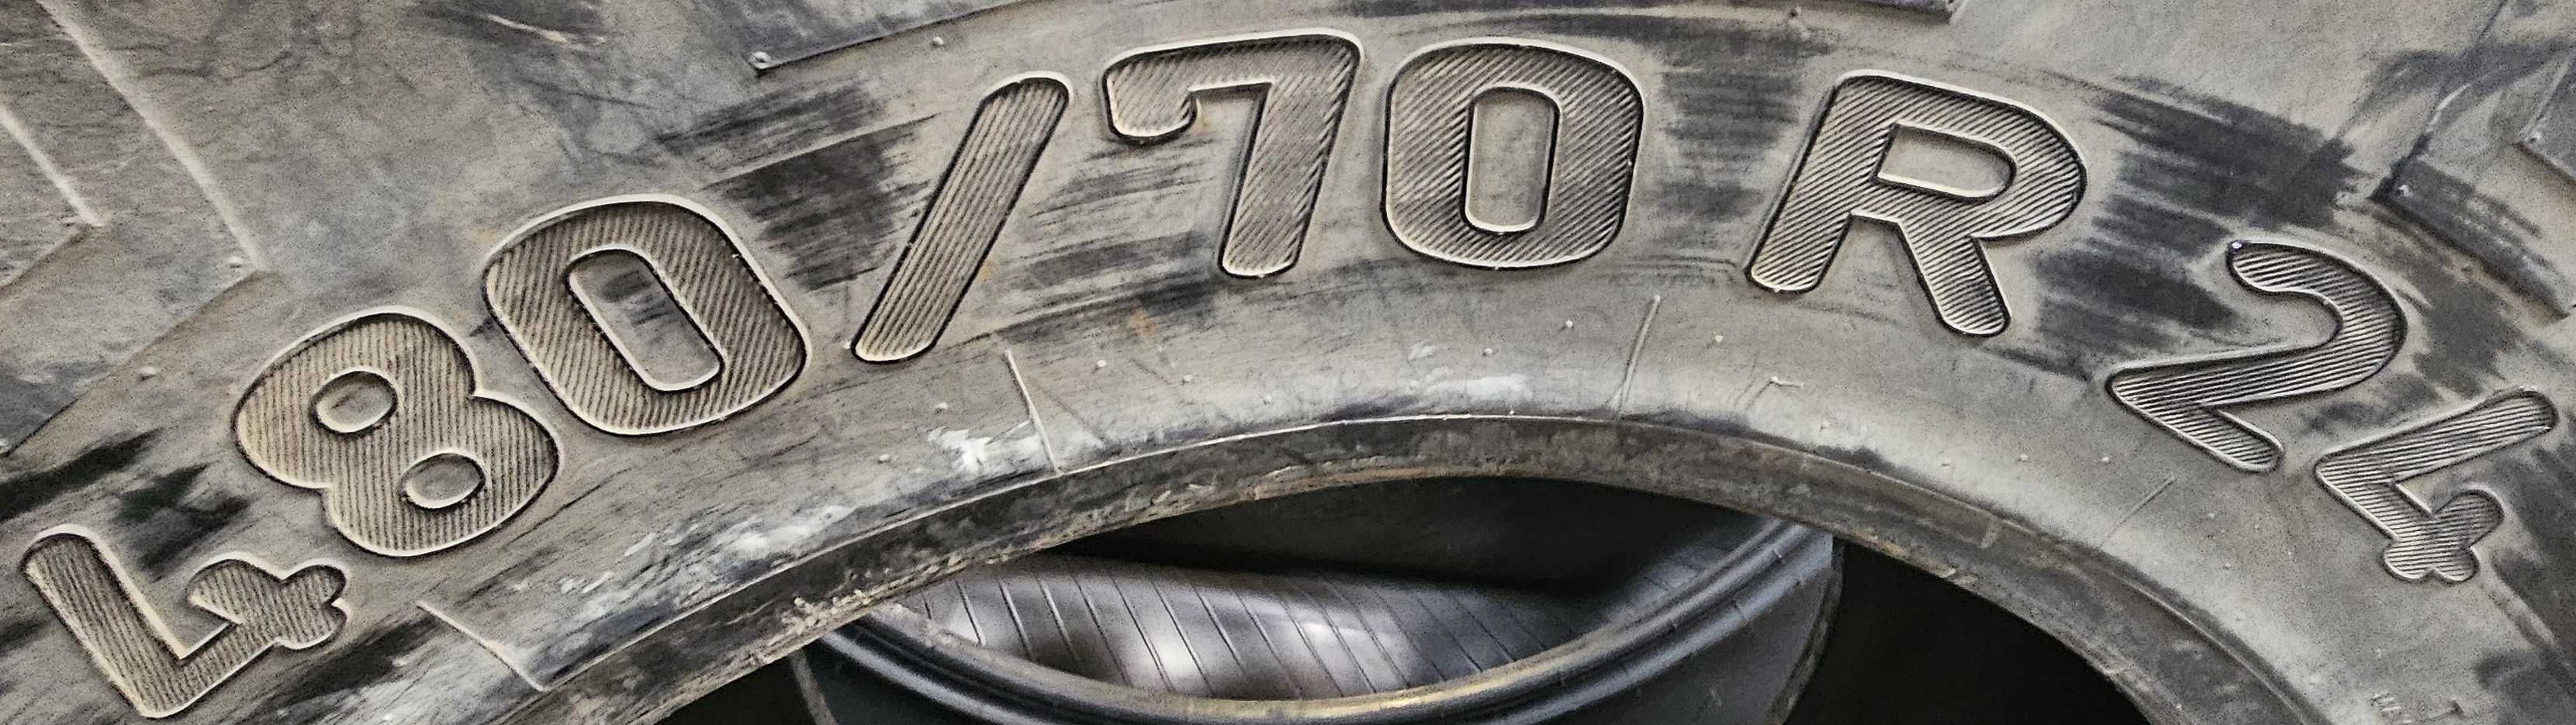 Opona 480/70R24 Pirelli *S